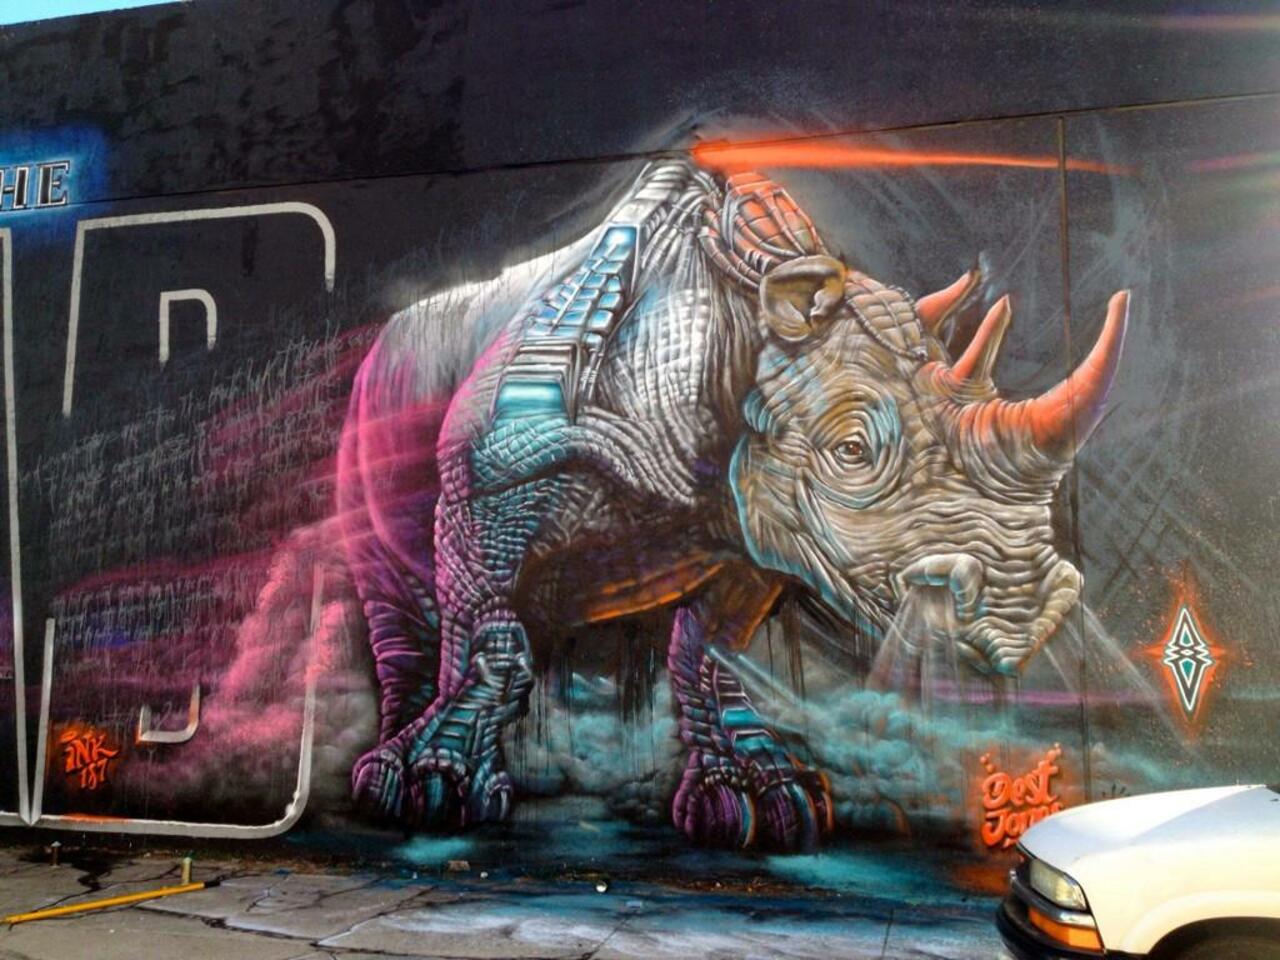 "@XSkye1: “@GoogleStreetArt: Incredible Street Art by artist Dest 

#art #mural #graffiti #streetart http://t.co/i1FbQMFR2o”"